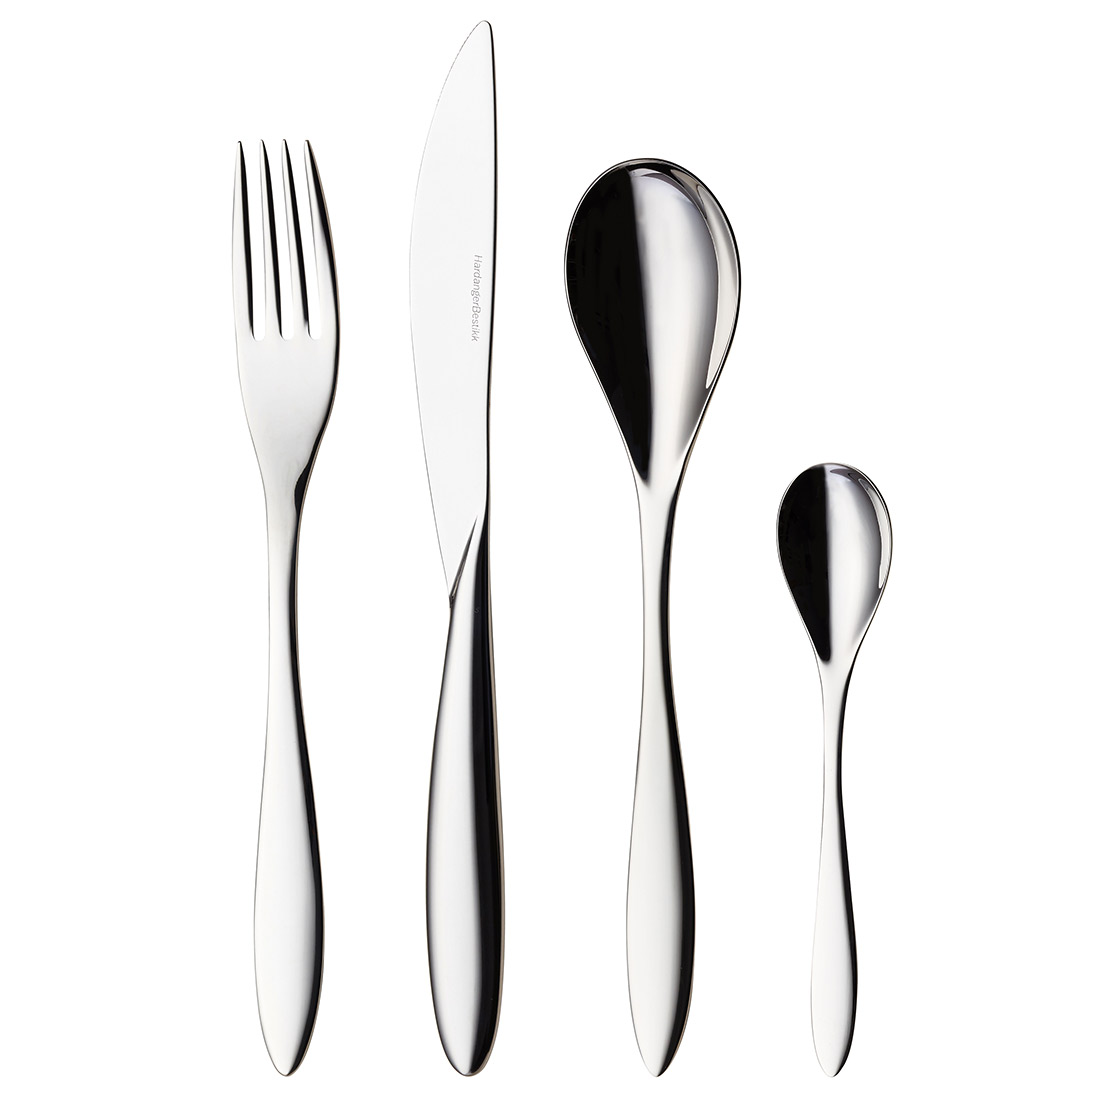 Maria cutlery set product image